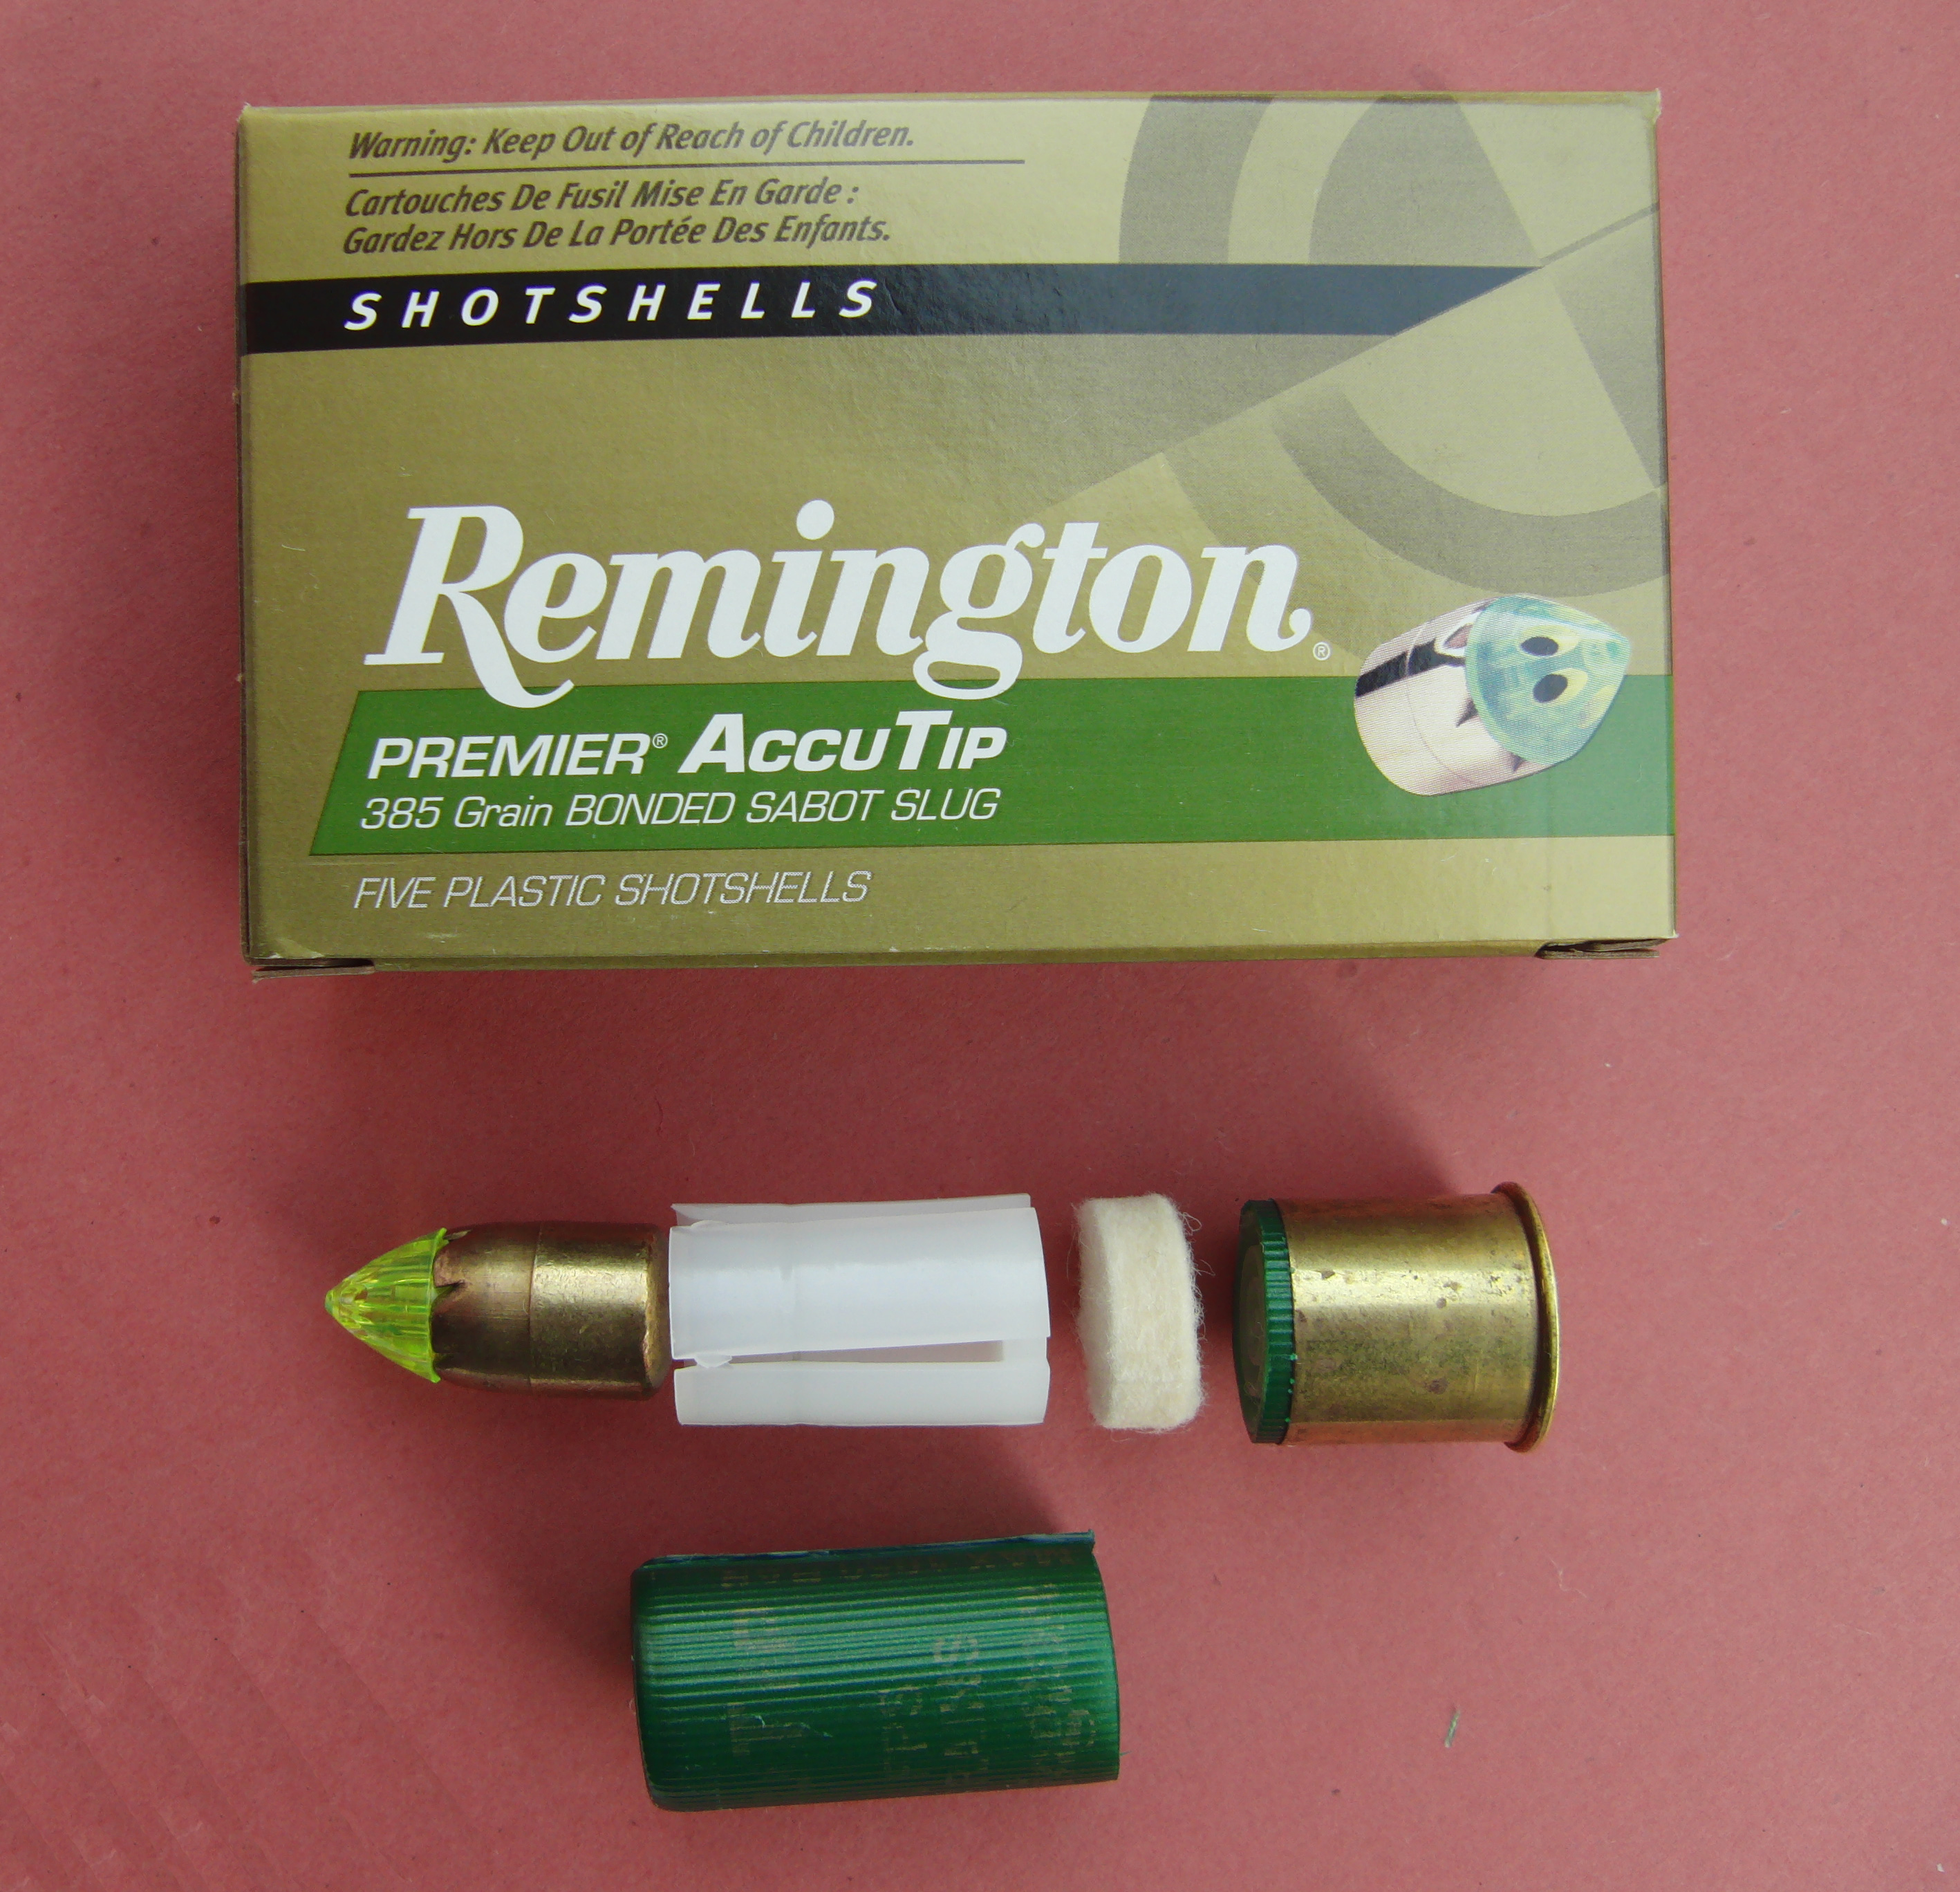 Remington Accutip desmontada